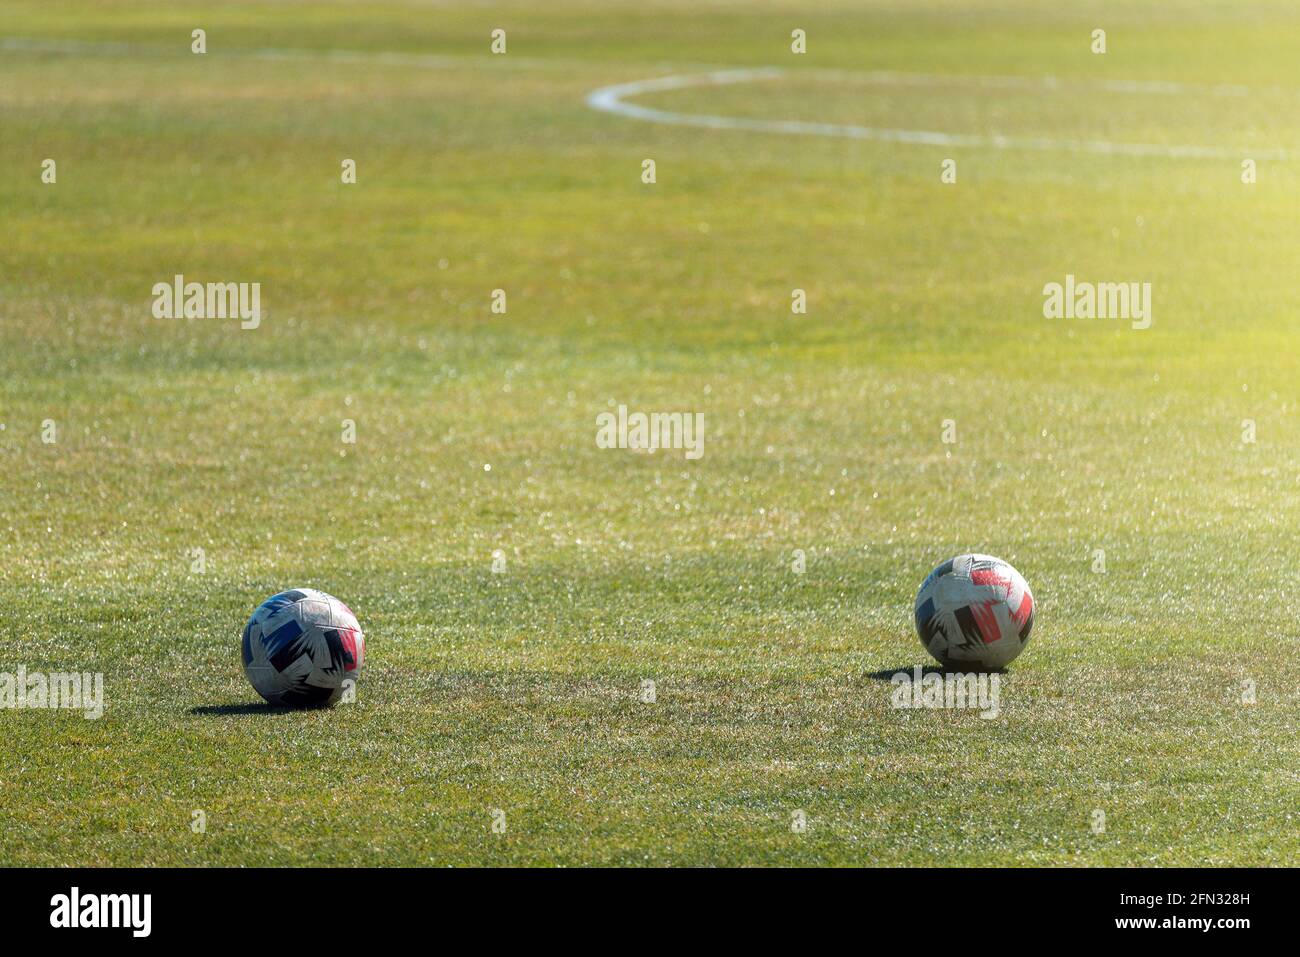 Deux ballons de football sur un terrain de jeu en gazon naturel Banque D'Images